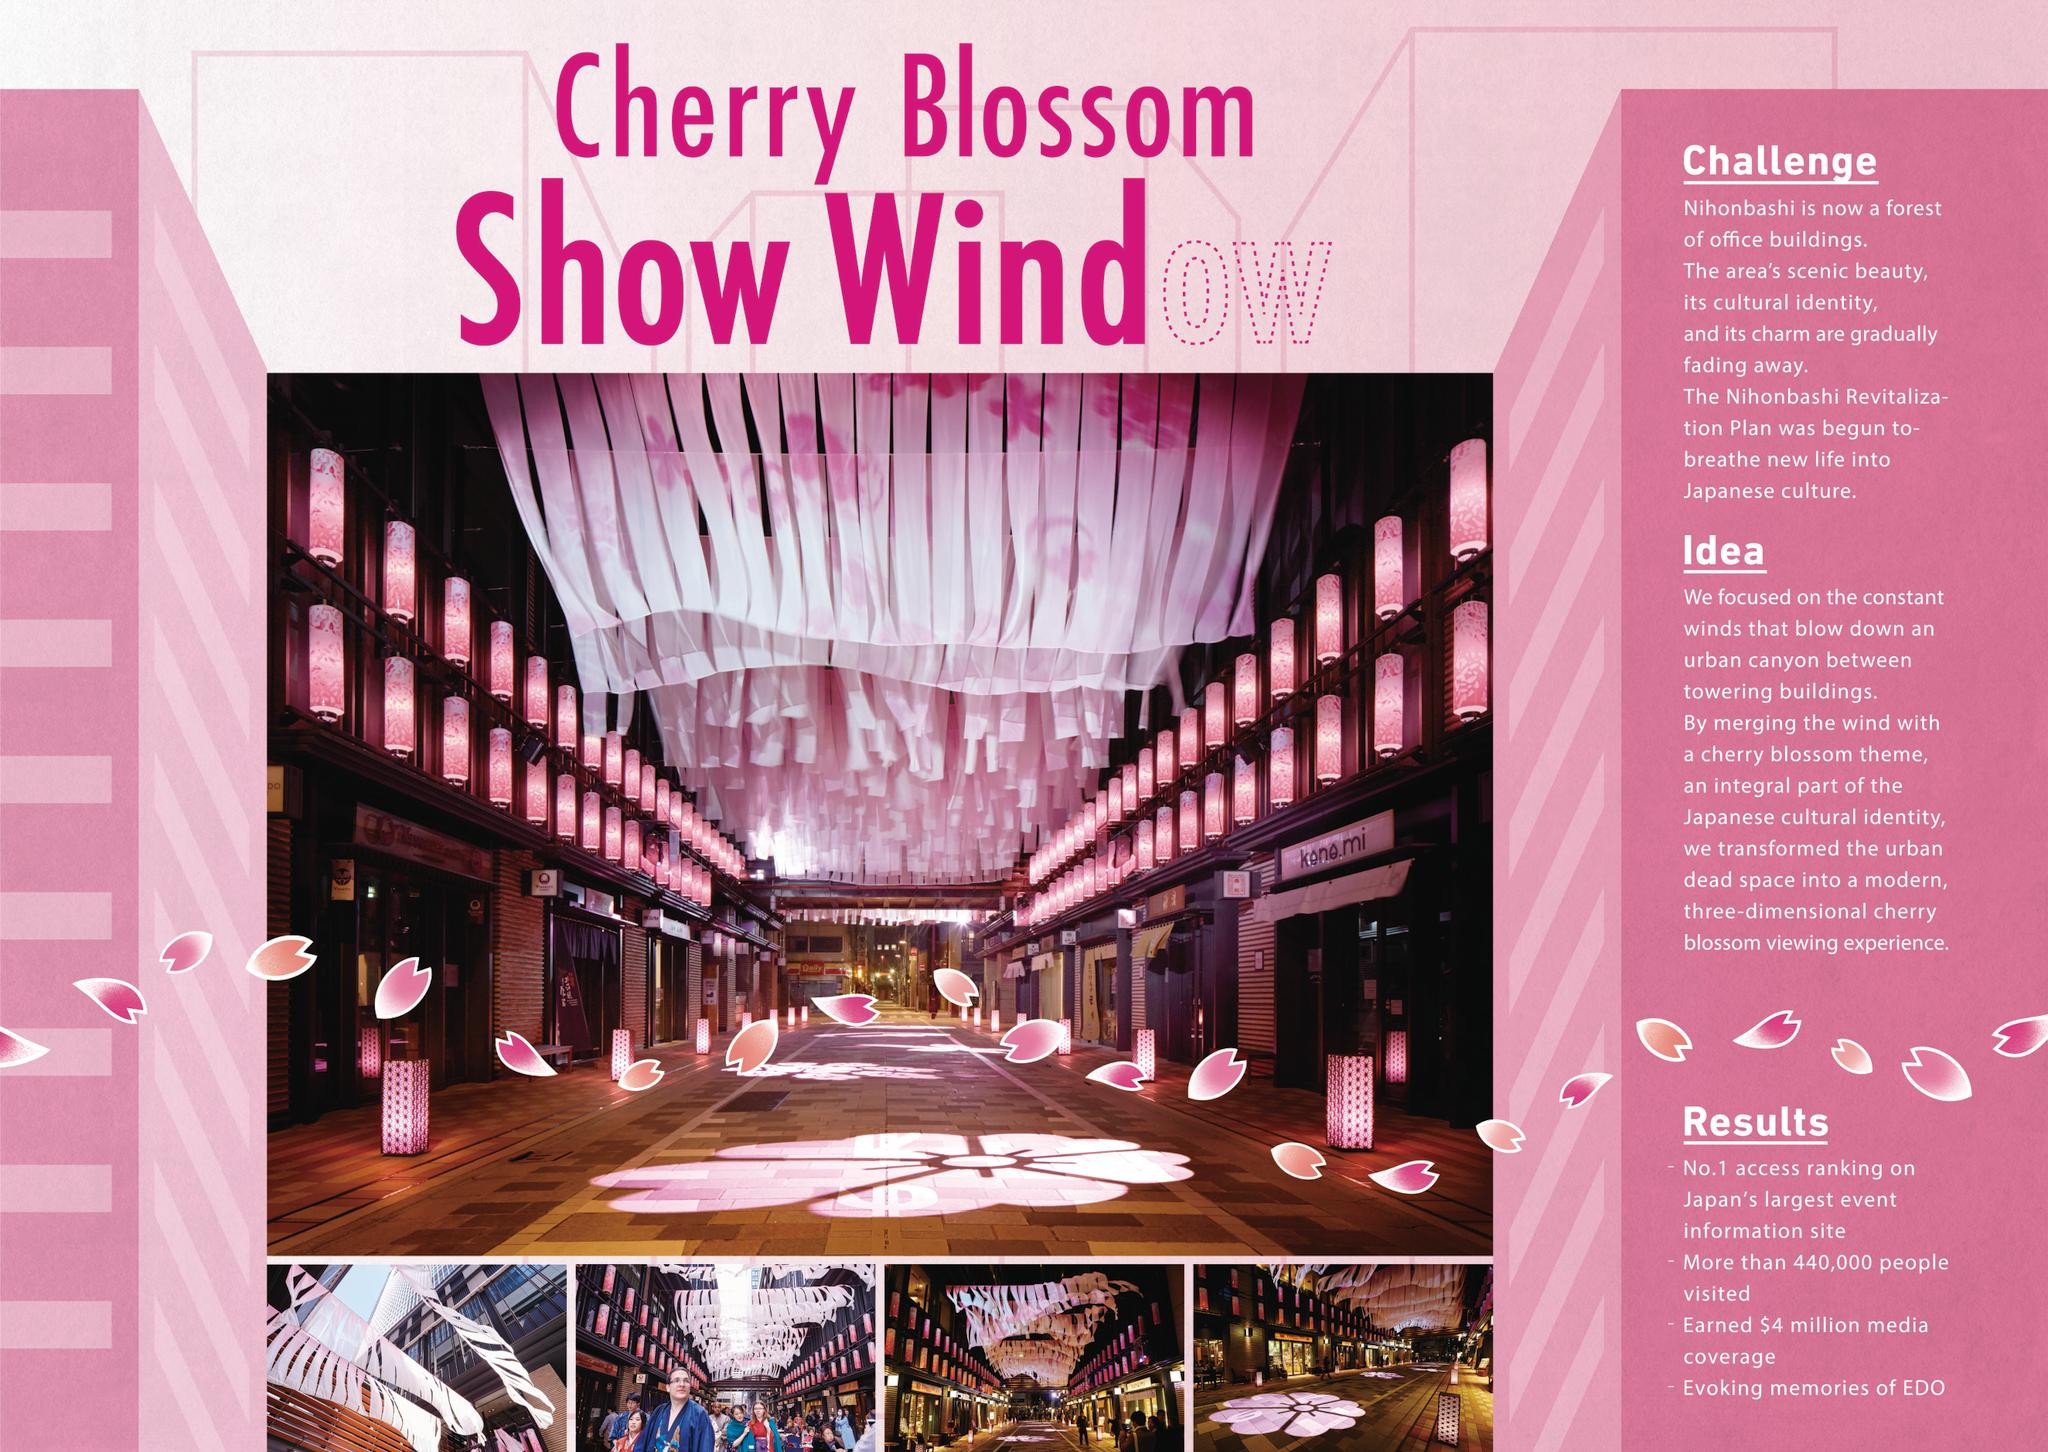 Cherry Blossom Show Wind